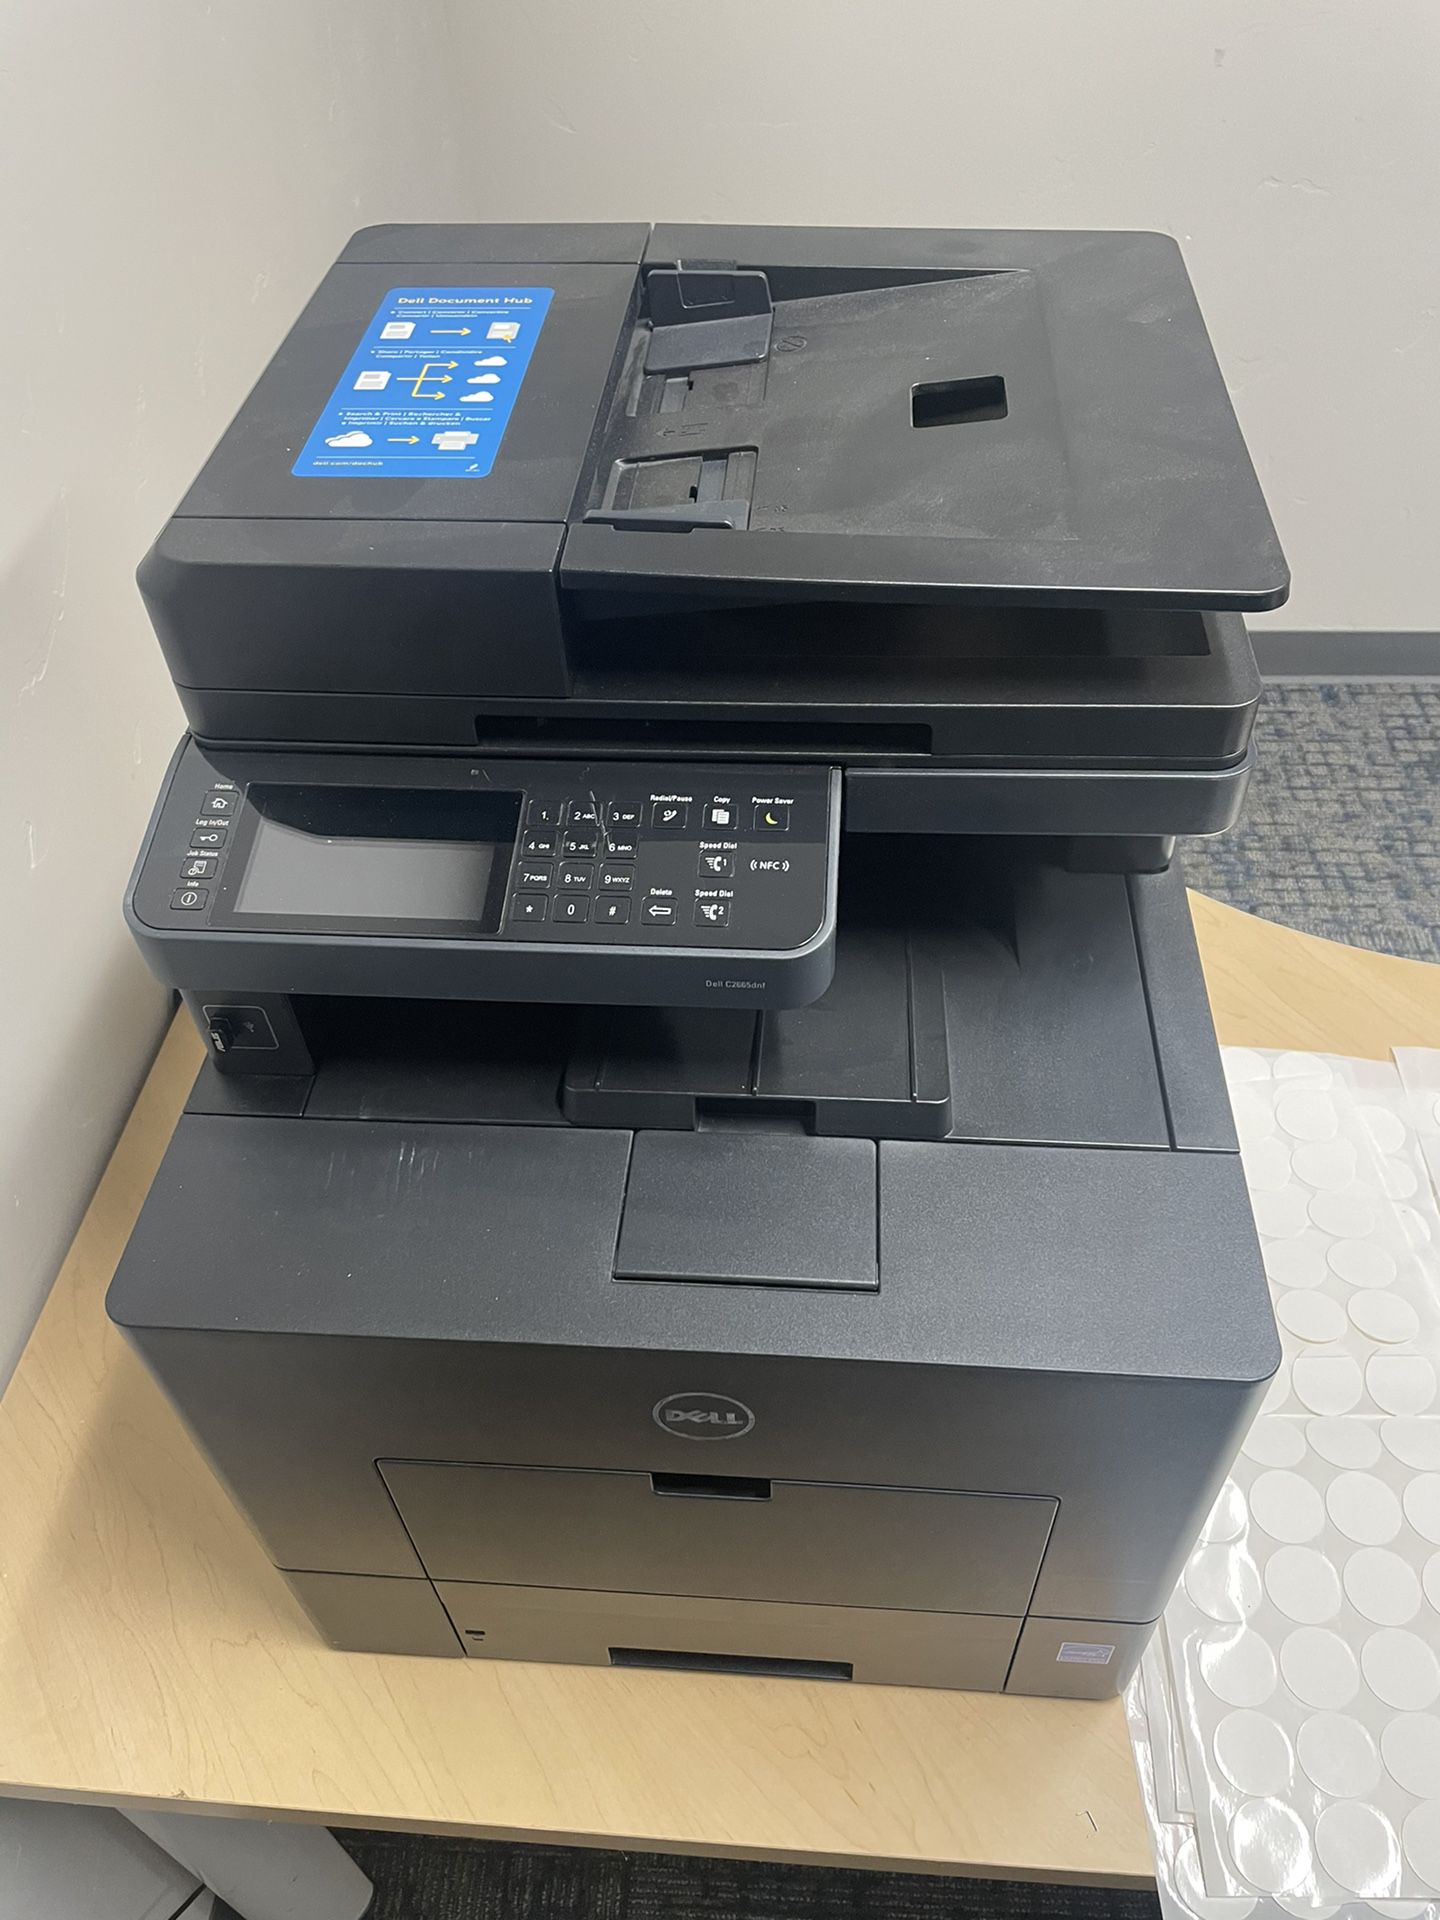 Brand New Never Used Commercial Grade Dell Printer & Scanner